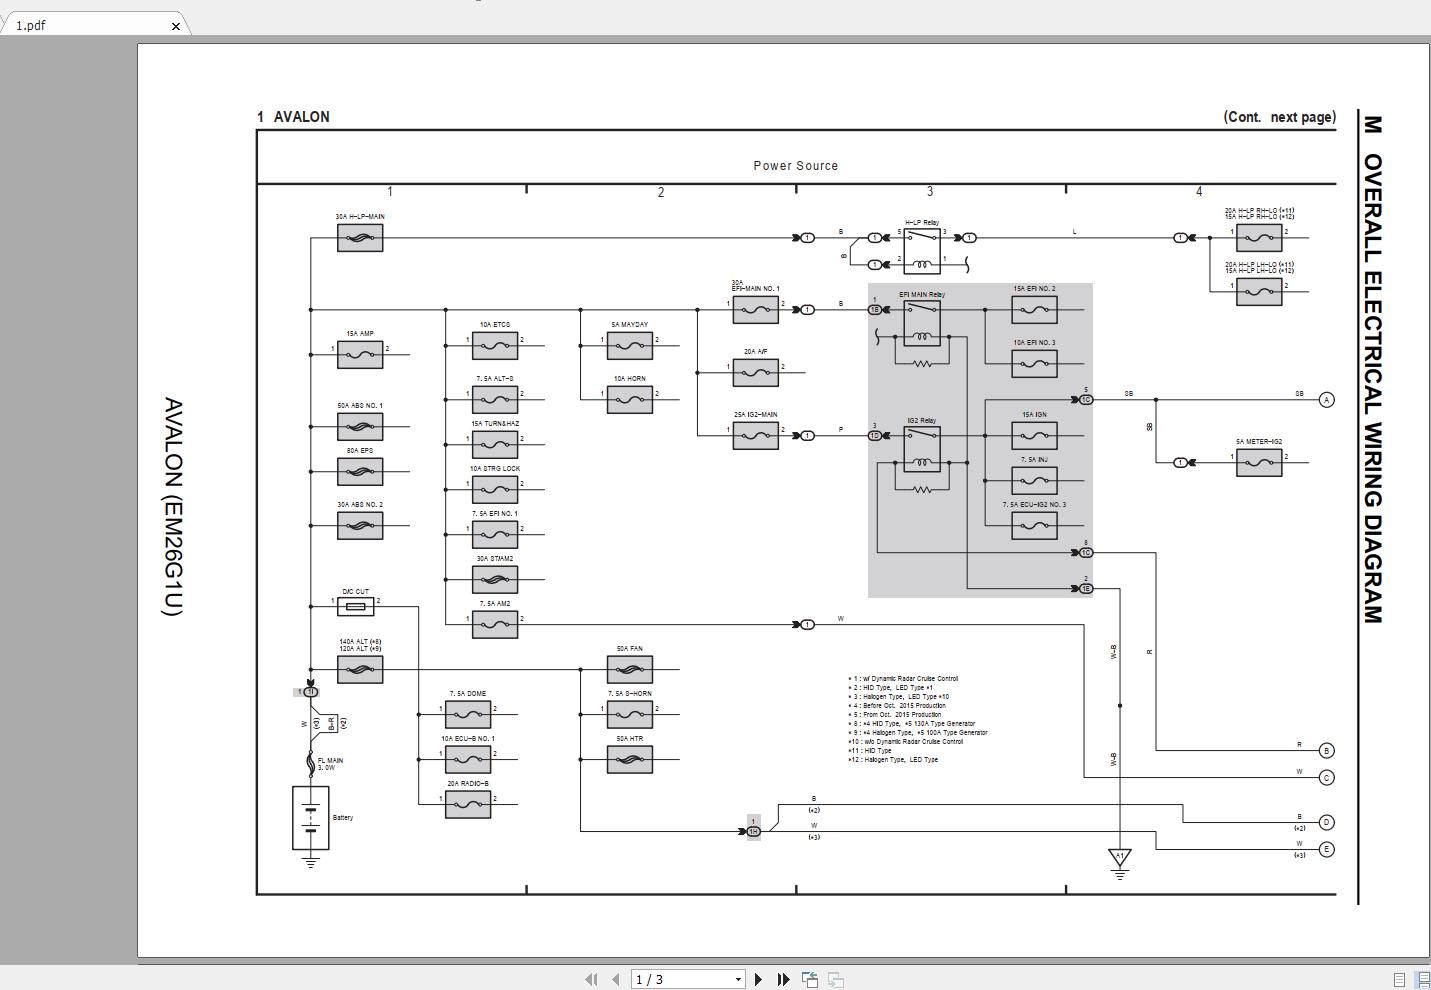 Toyota GISC Workshop Manual & Electrical Wiring Diagram ... 01 tundra wiring diagram 